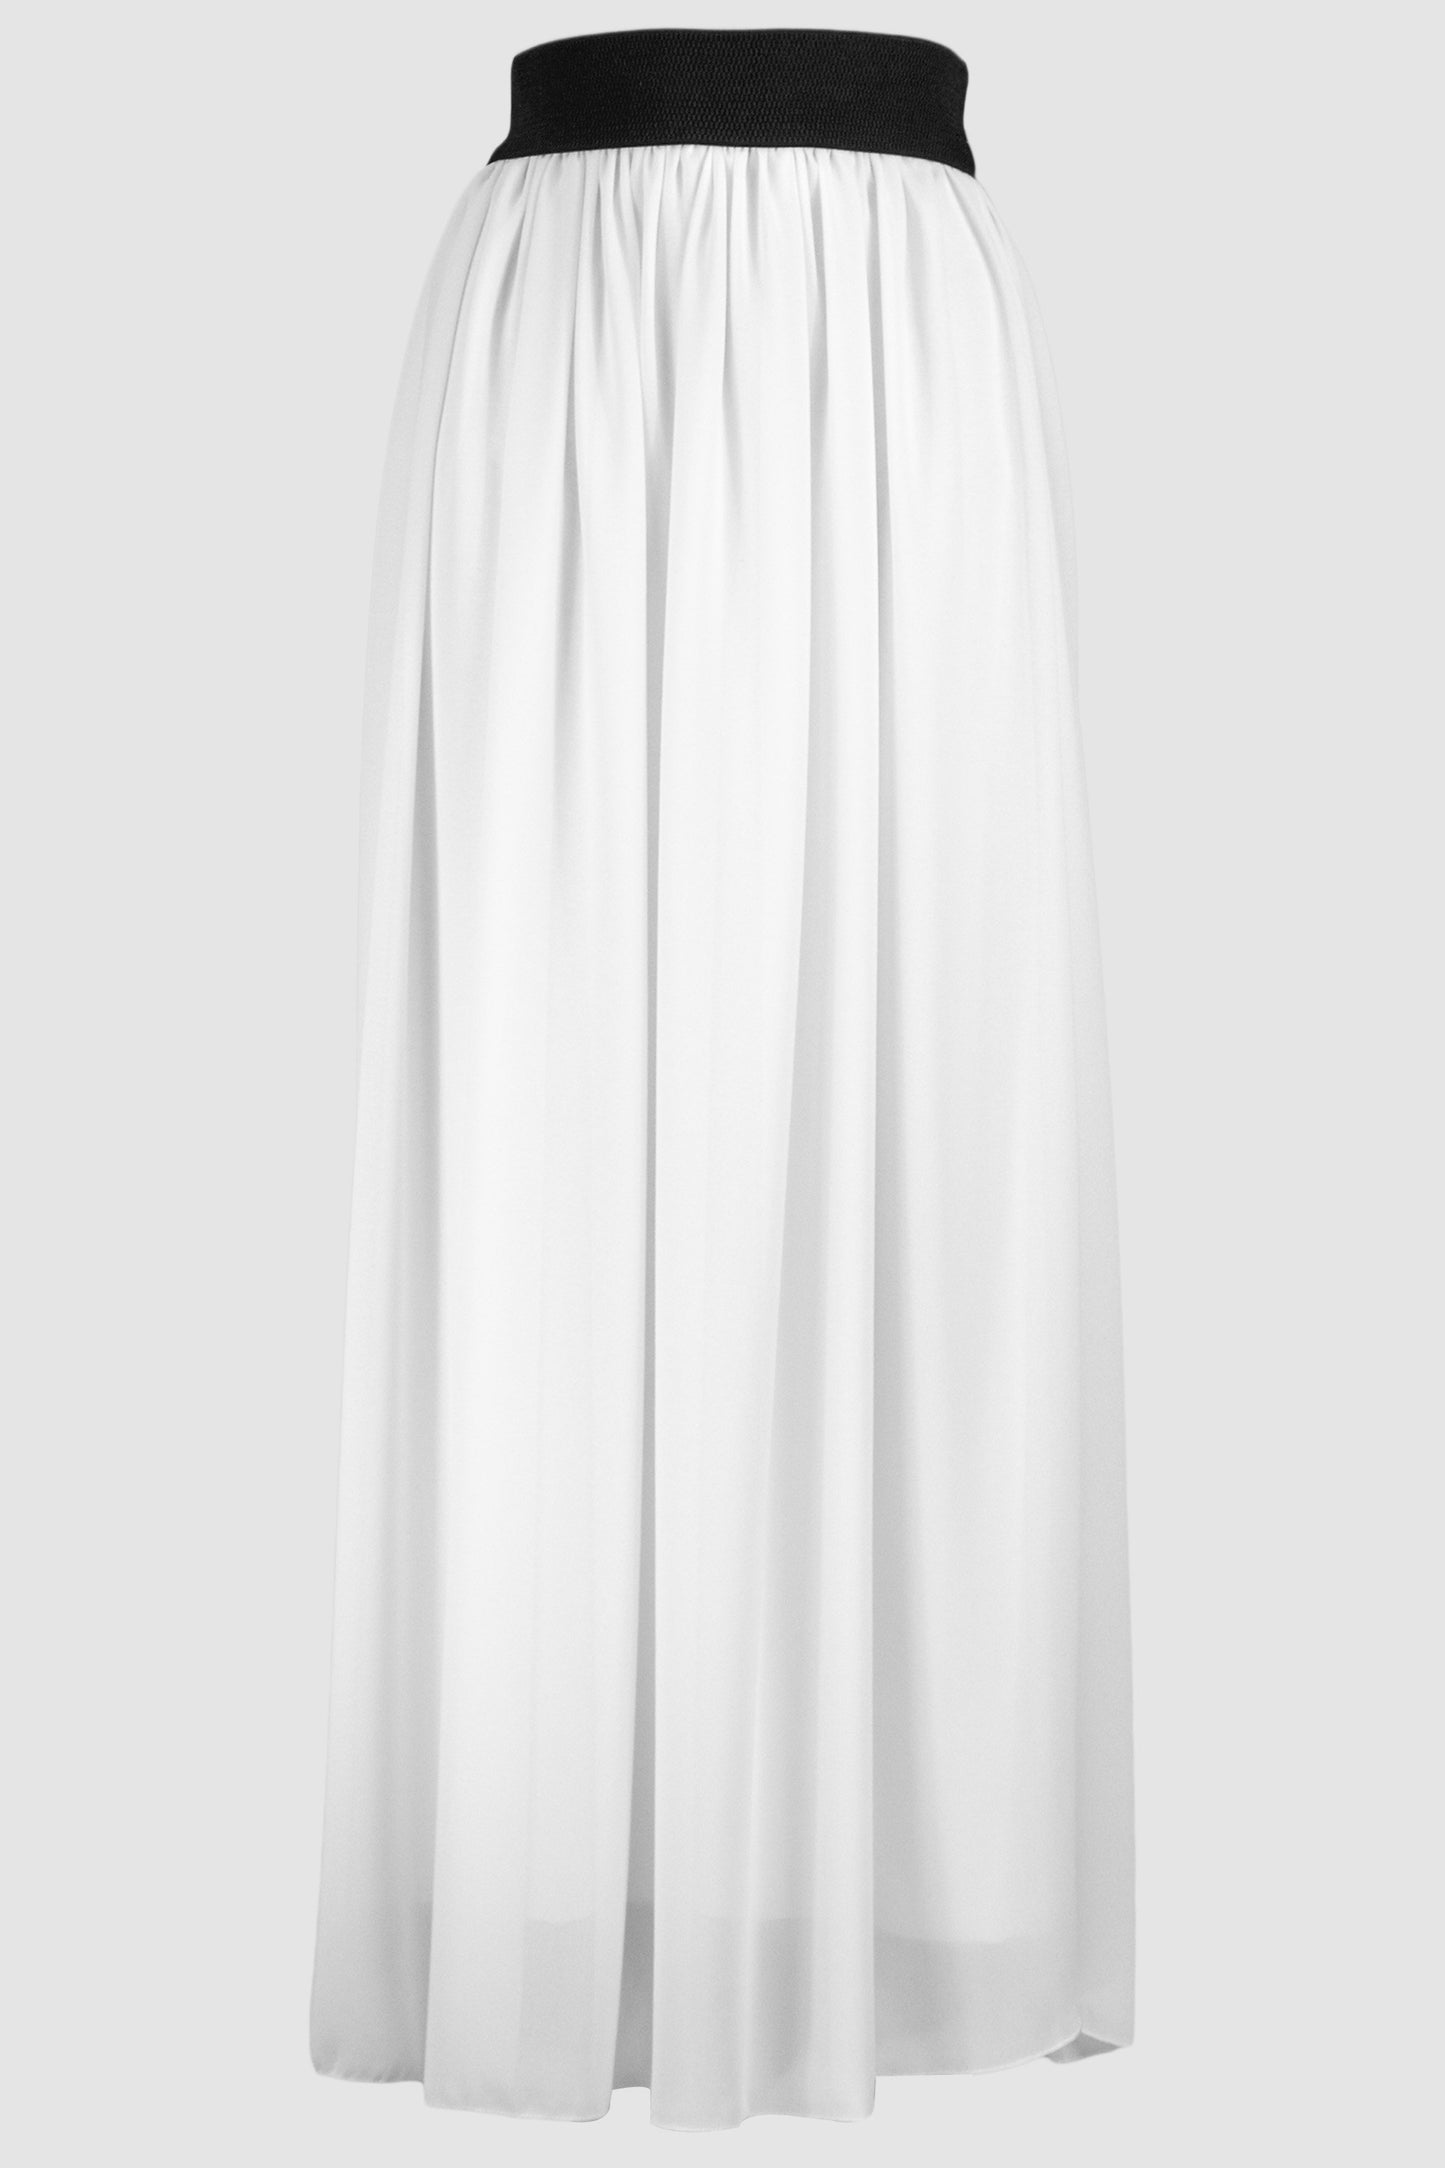 White Chiffon Flared Skirt With Inner Layer-almanaar Islamic Store